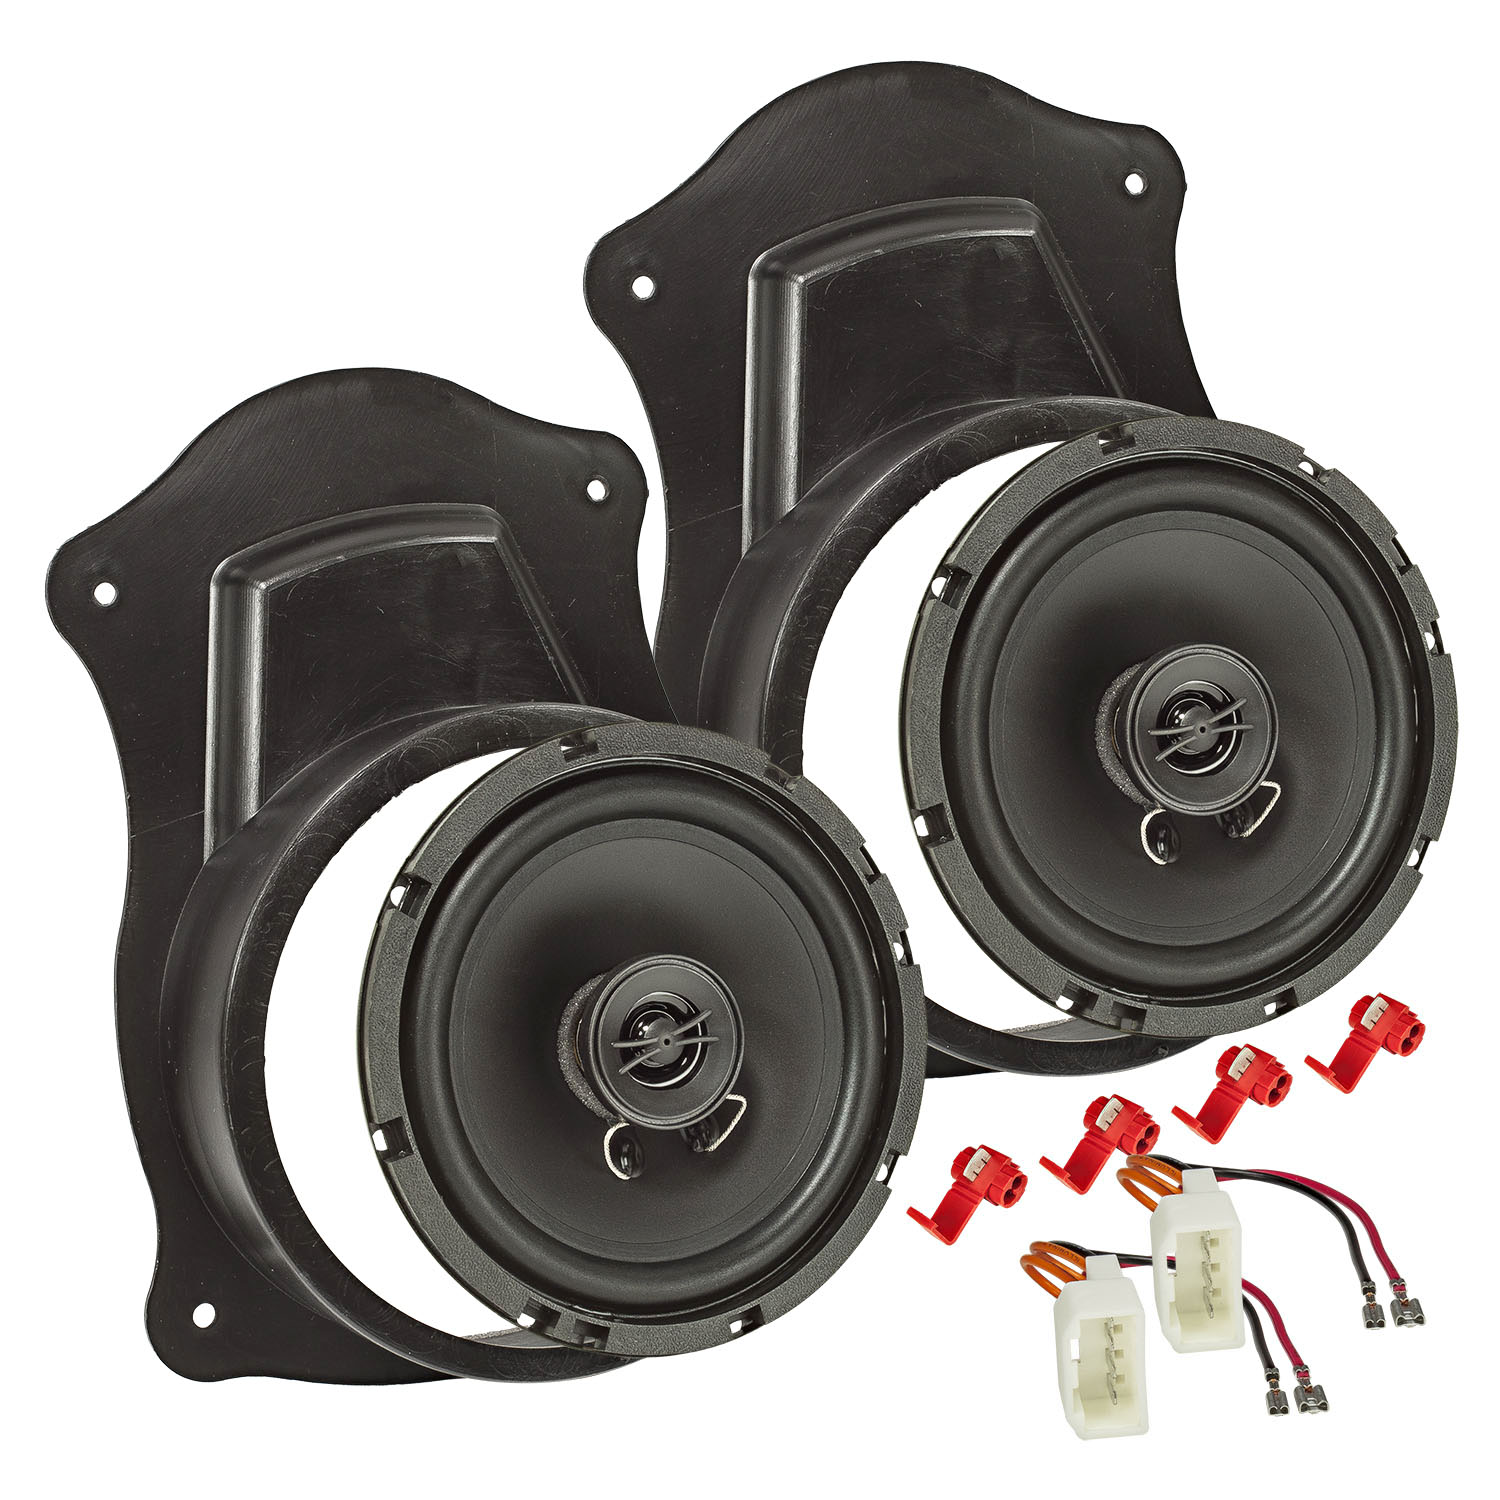 Lautsprecher Adapter Set kompatibel mit Ford Transit Custom Transit Connect 165mm 2-Wege Koaxial System TA16.5-PRO adaptiert auf 165er Lautsprecher